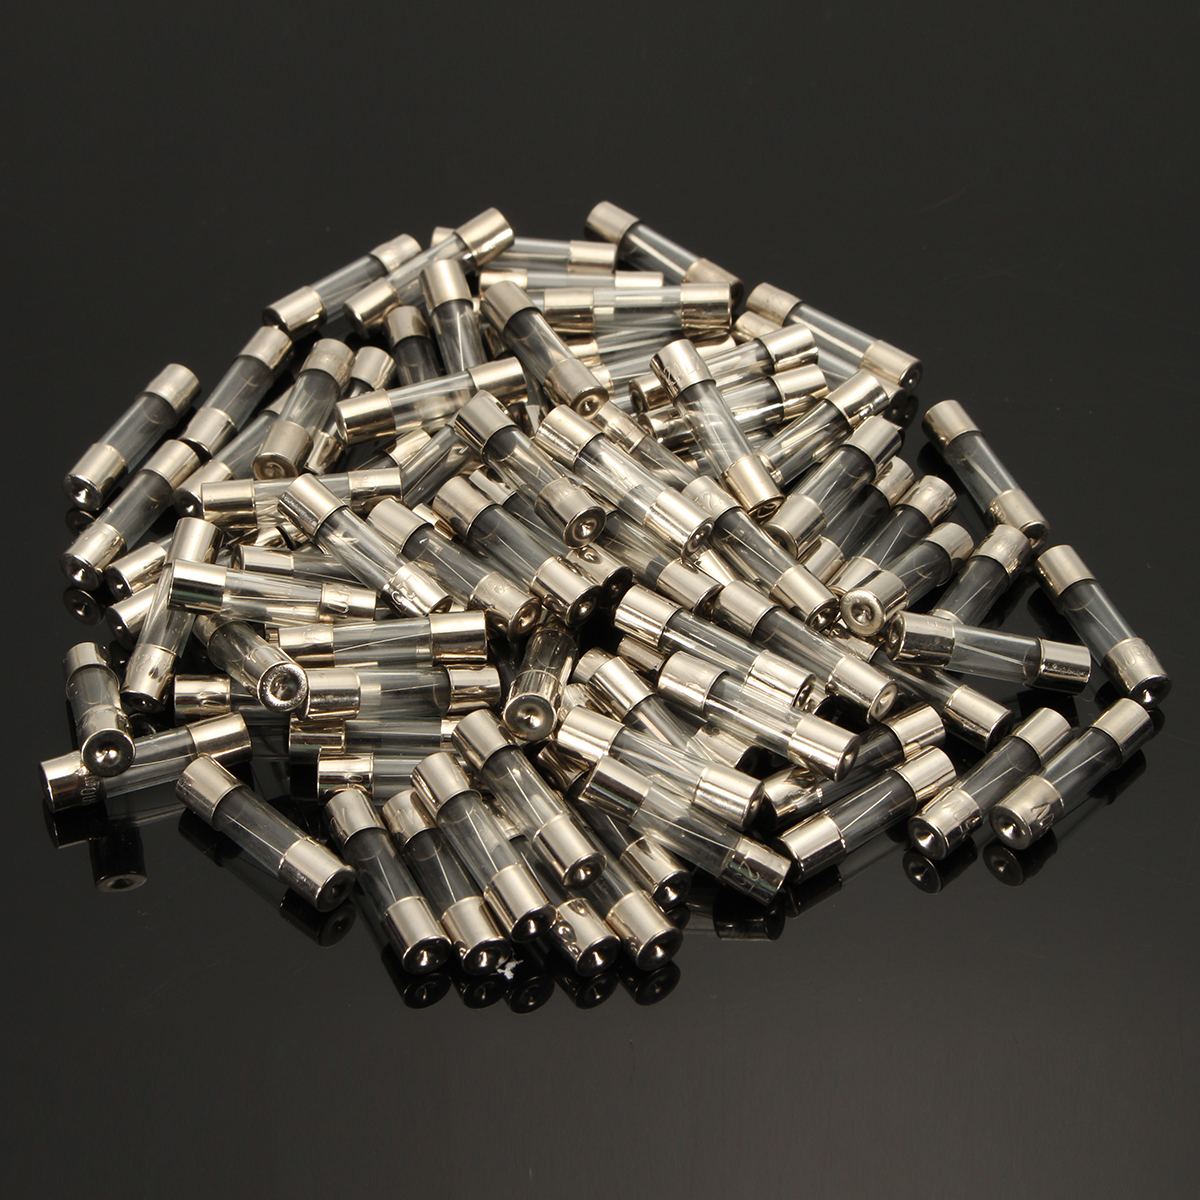 DANIU 100Pcs 5x20mm 0.2A-20A Quick Blow Glass Tube Fuse Assorted Kit Fast-blow Glass Fuses